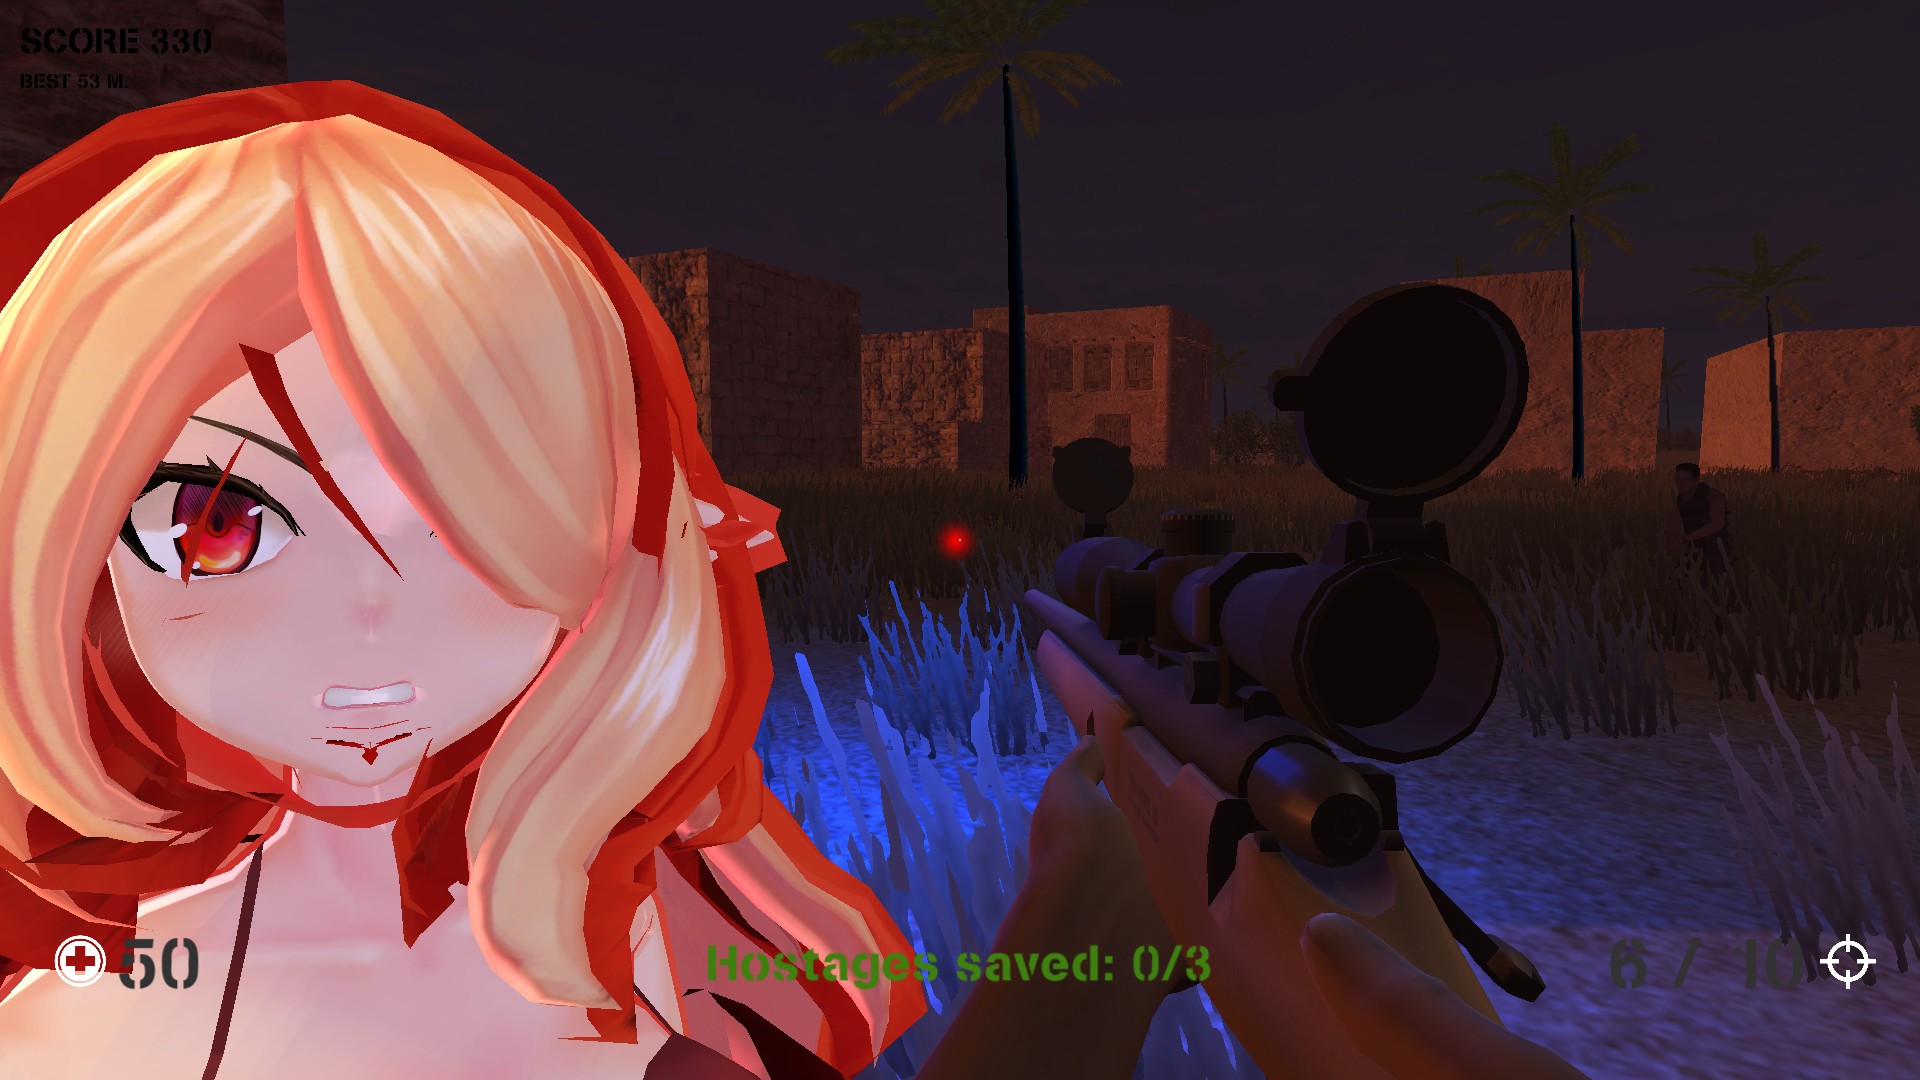 Sexy Sexy Sniper